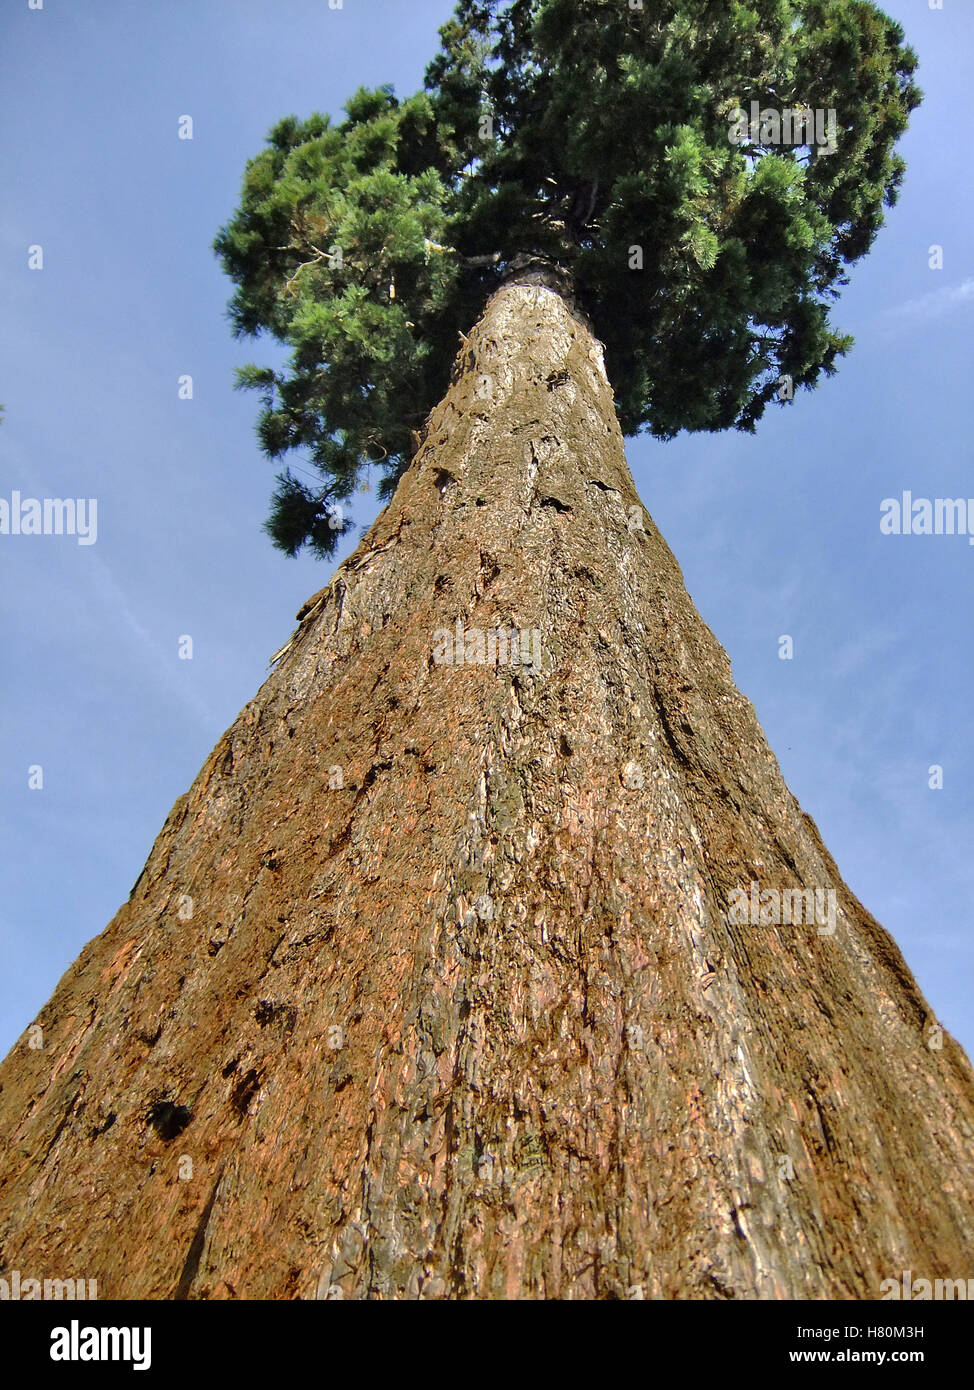 tall pine tree Stock Photo